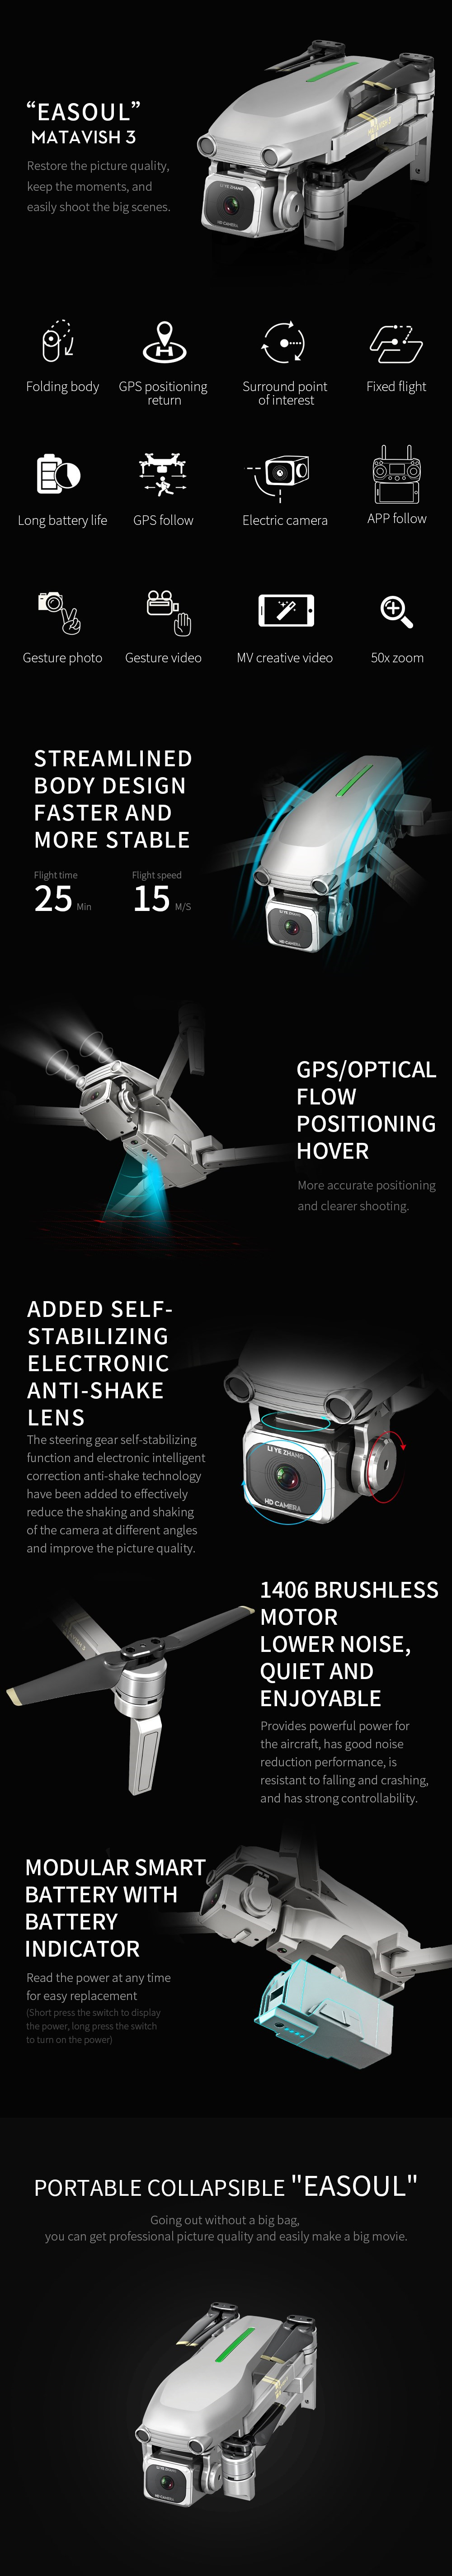 LYZRC-L109-S-MATAVISH3-5G-Anti-shake-Aerial-Drone-With-4K-1080P-HD-Camera-50X-Zoom-GPS-Foldable-Brus-1599903-2